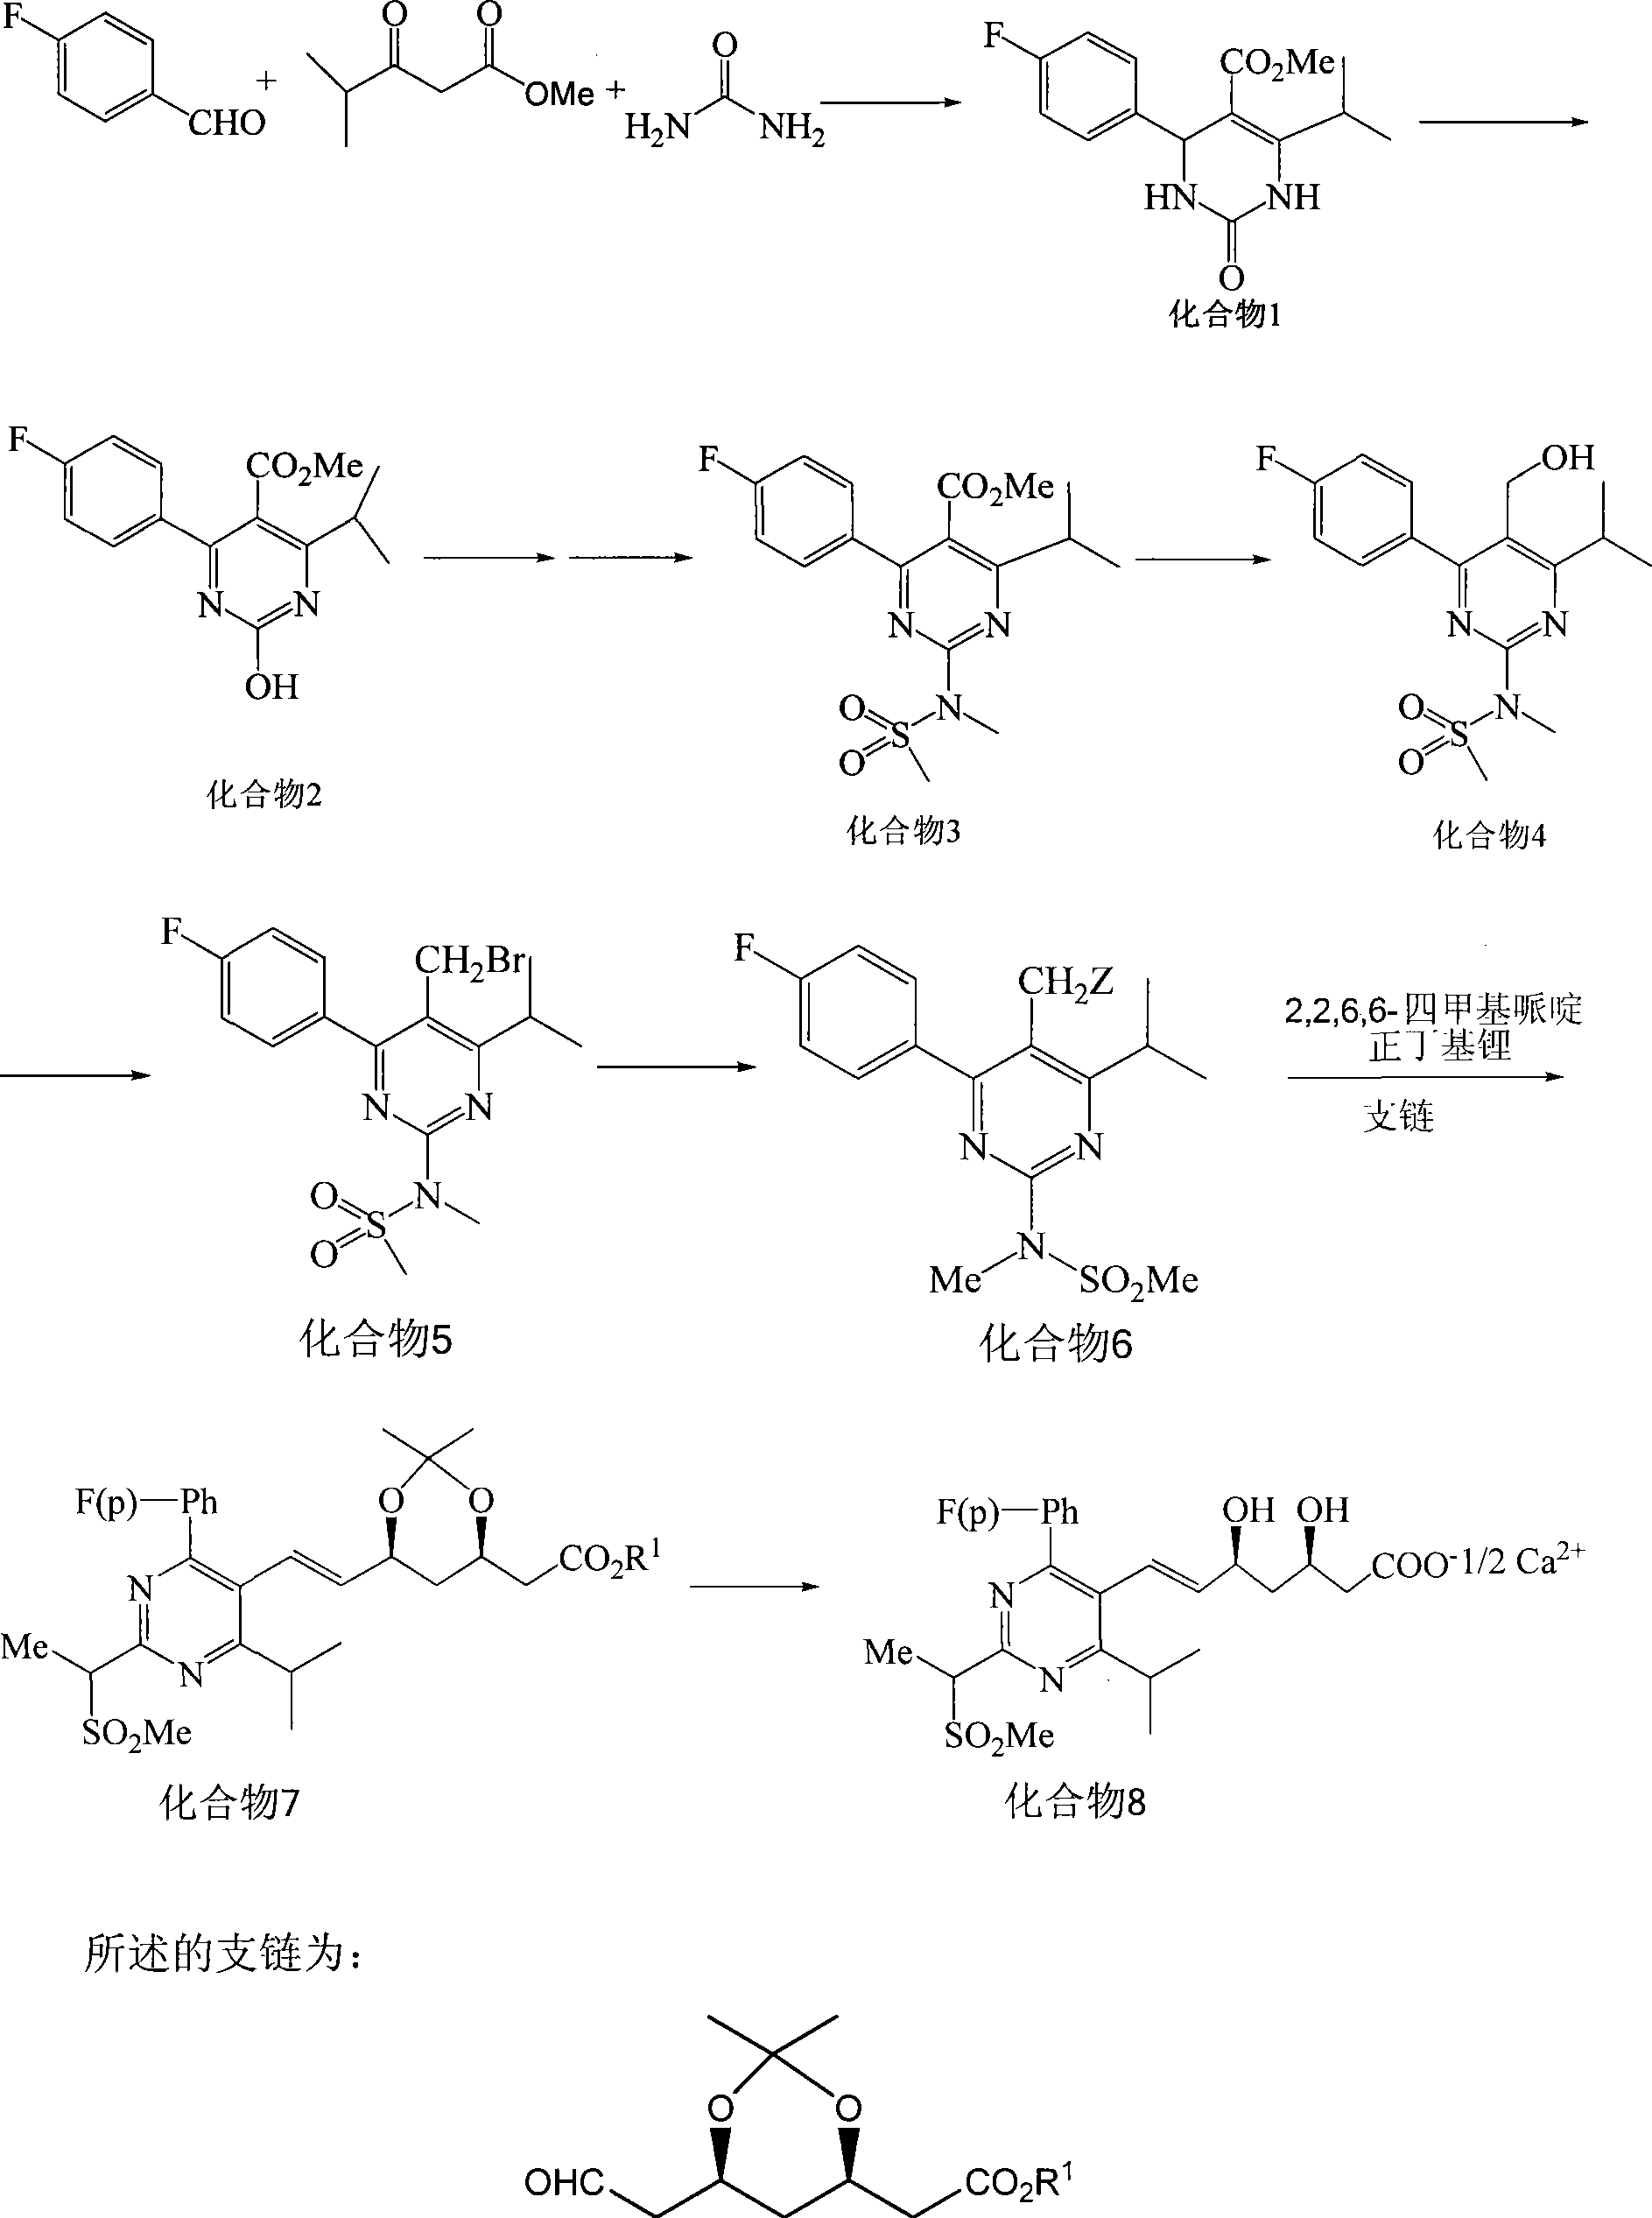 Method for synthesizing rosuvastatin intermediate and rosuvastatin